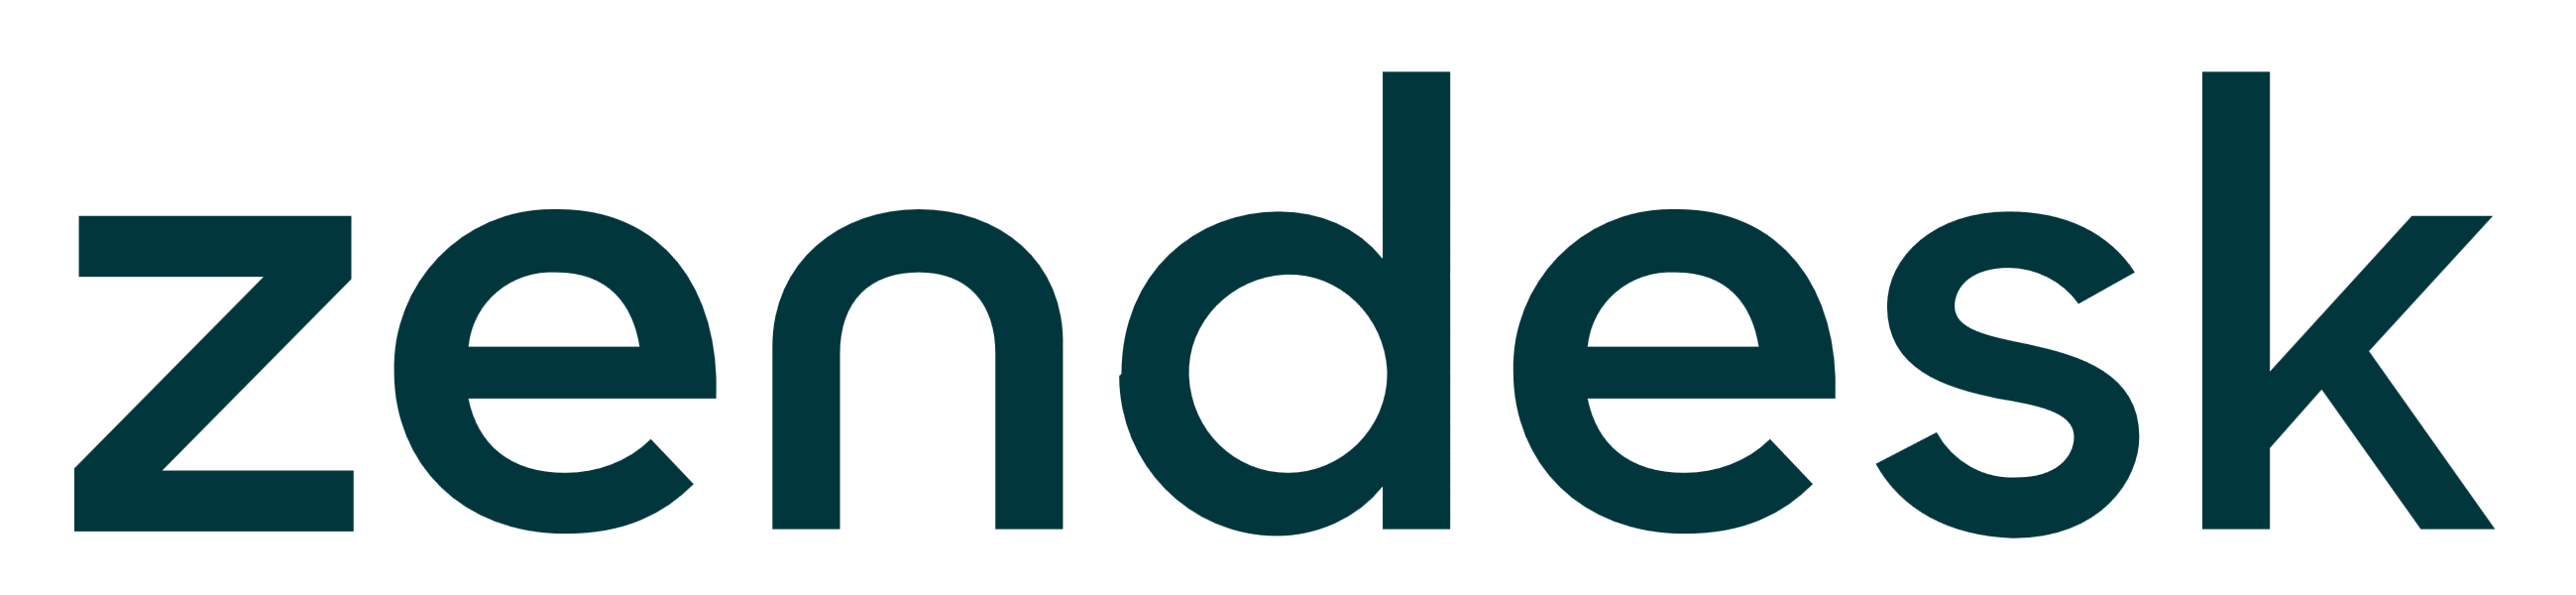 Zendesk_logo_wordmark